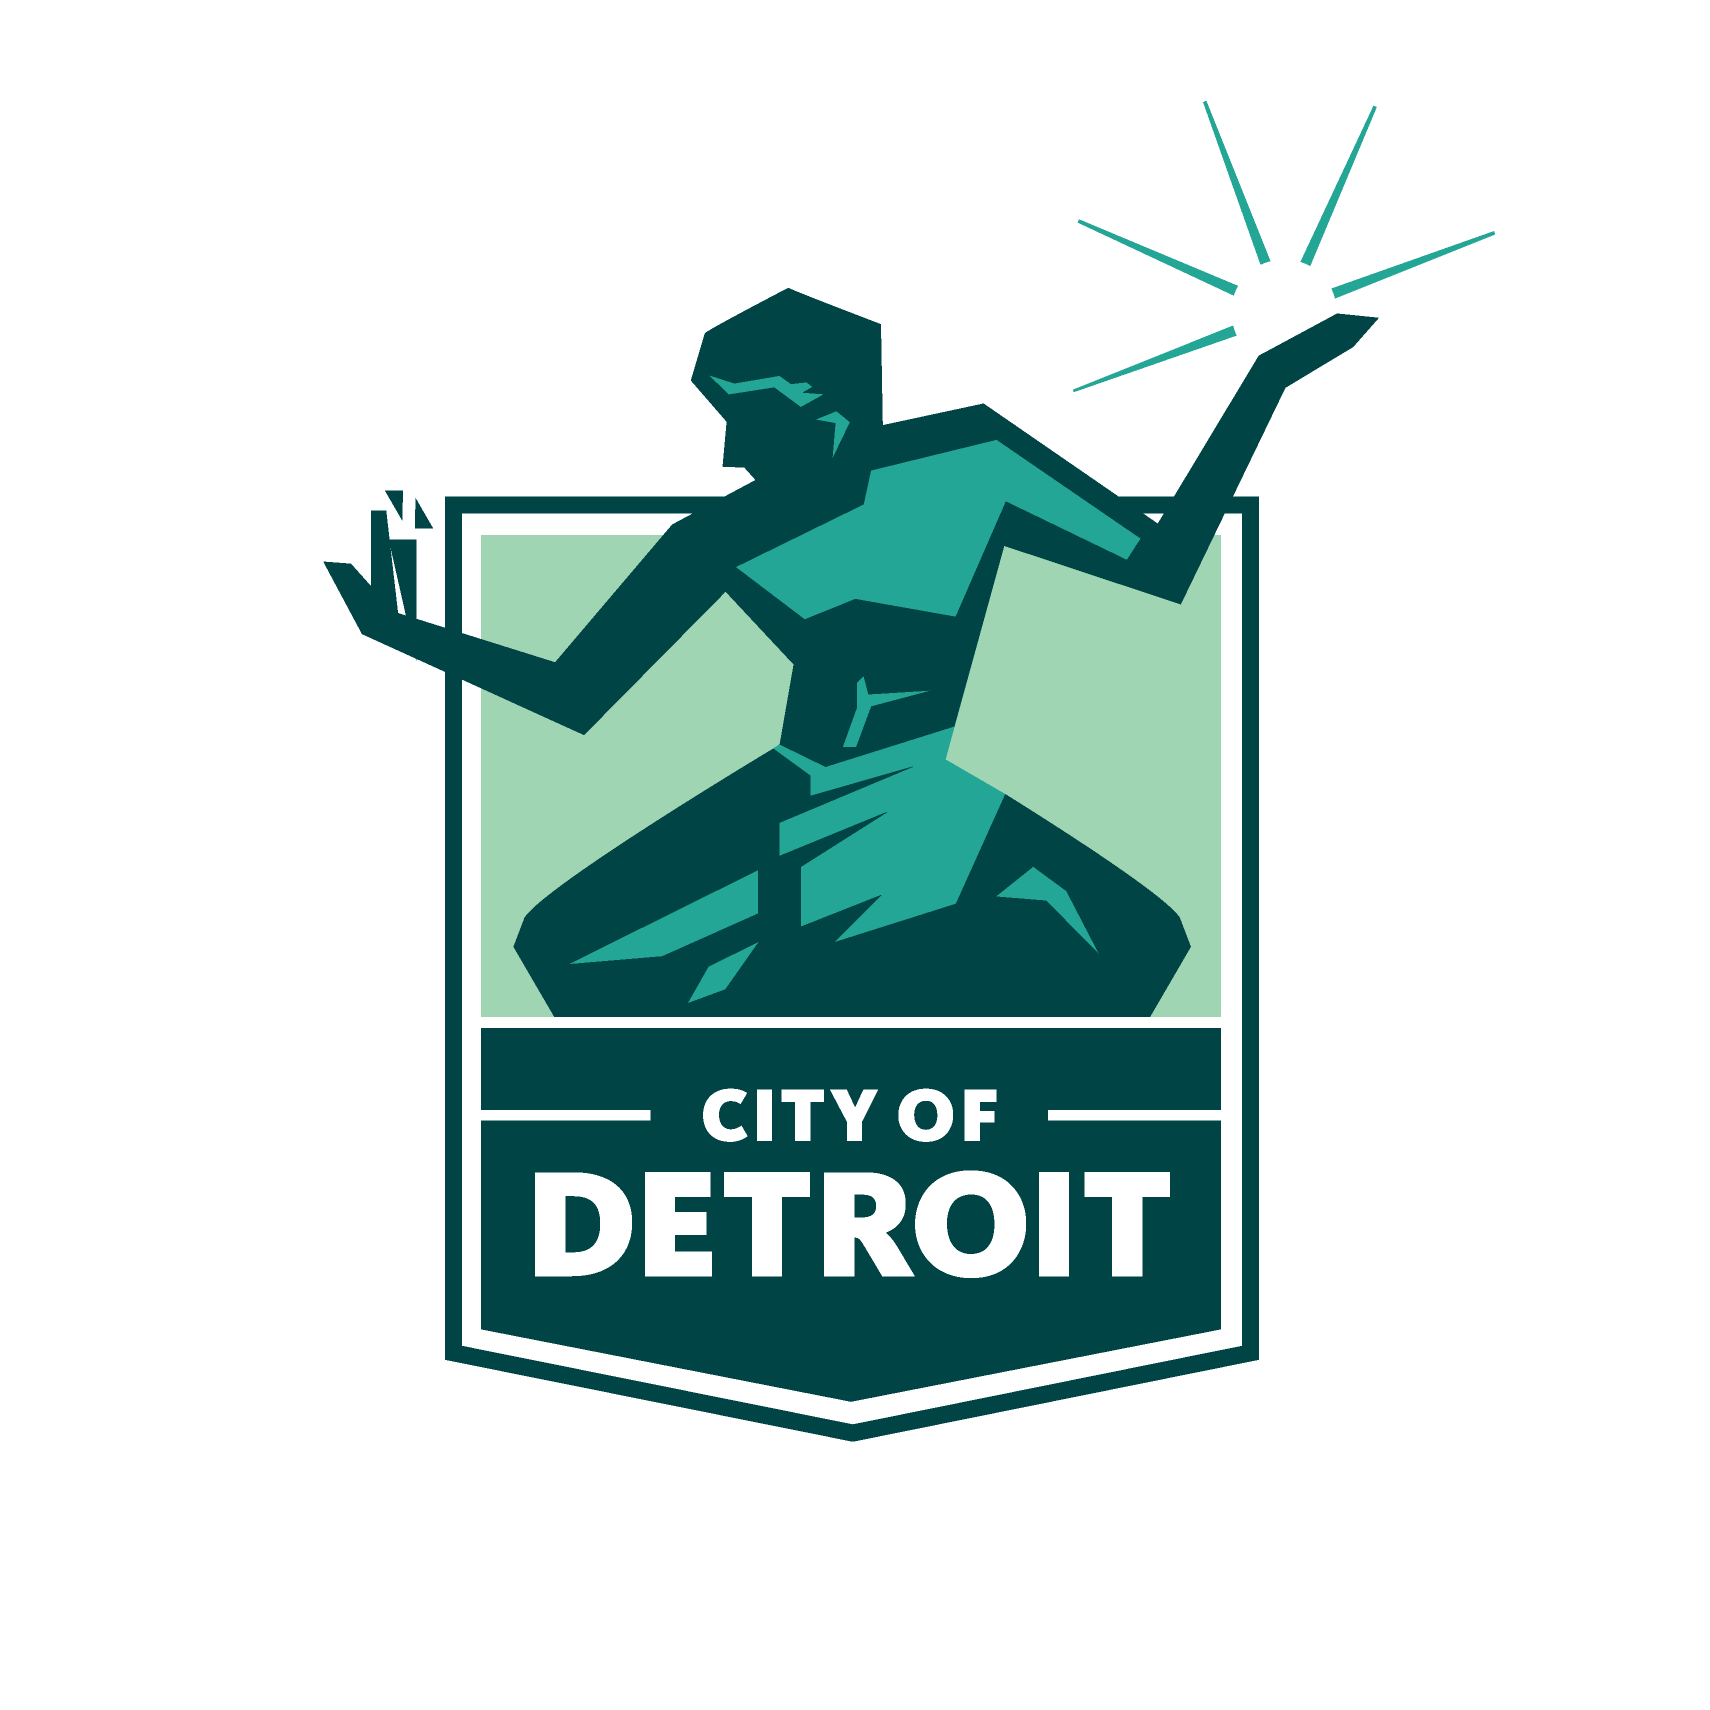 The City Logo - City of Detroit